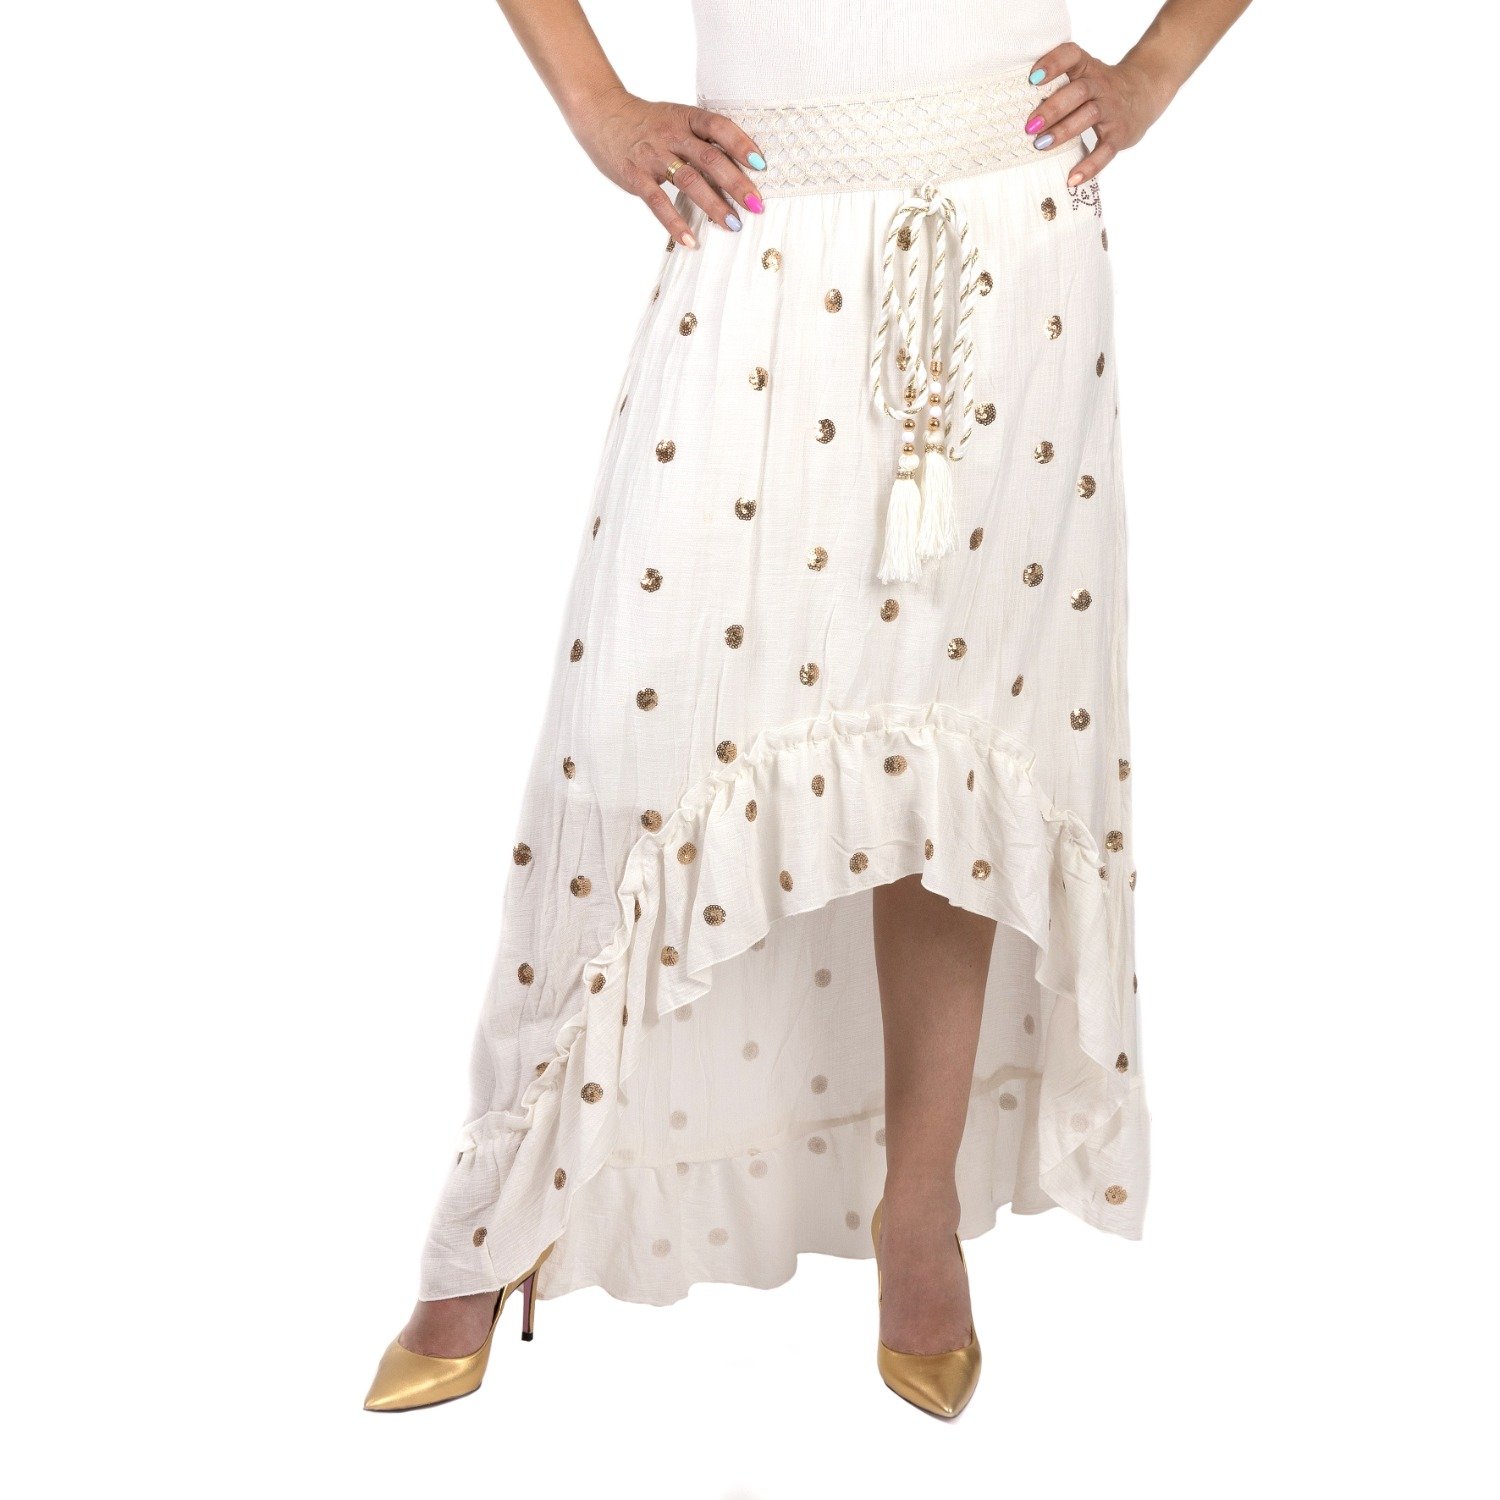 Falda asimétrica blanca-oro